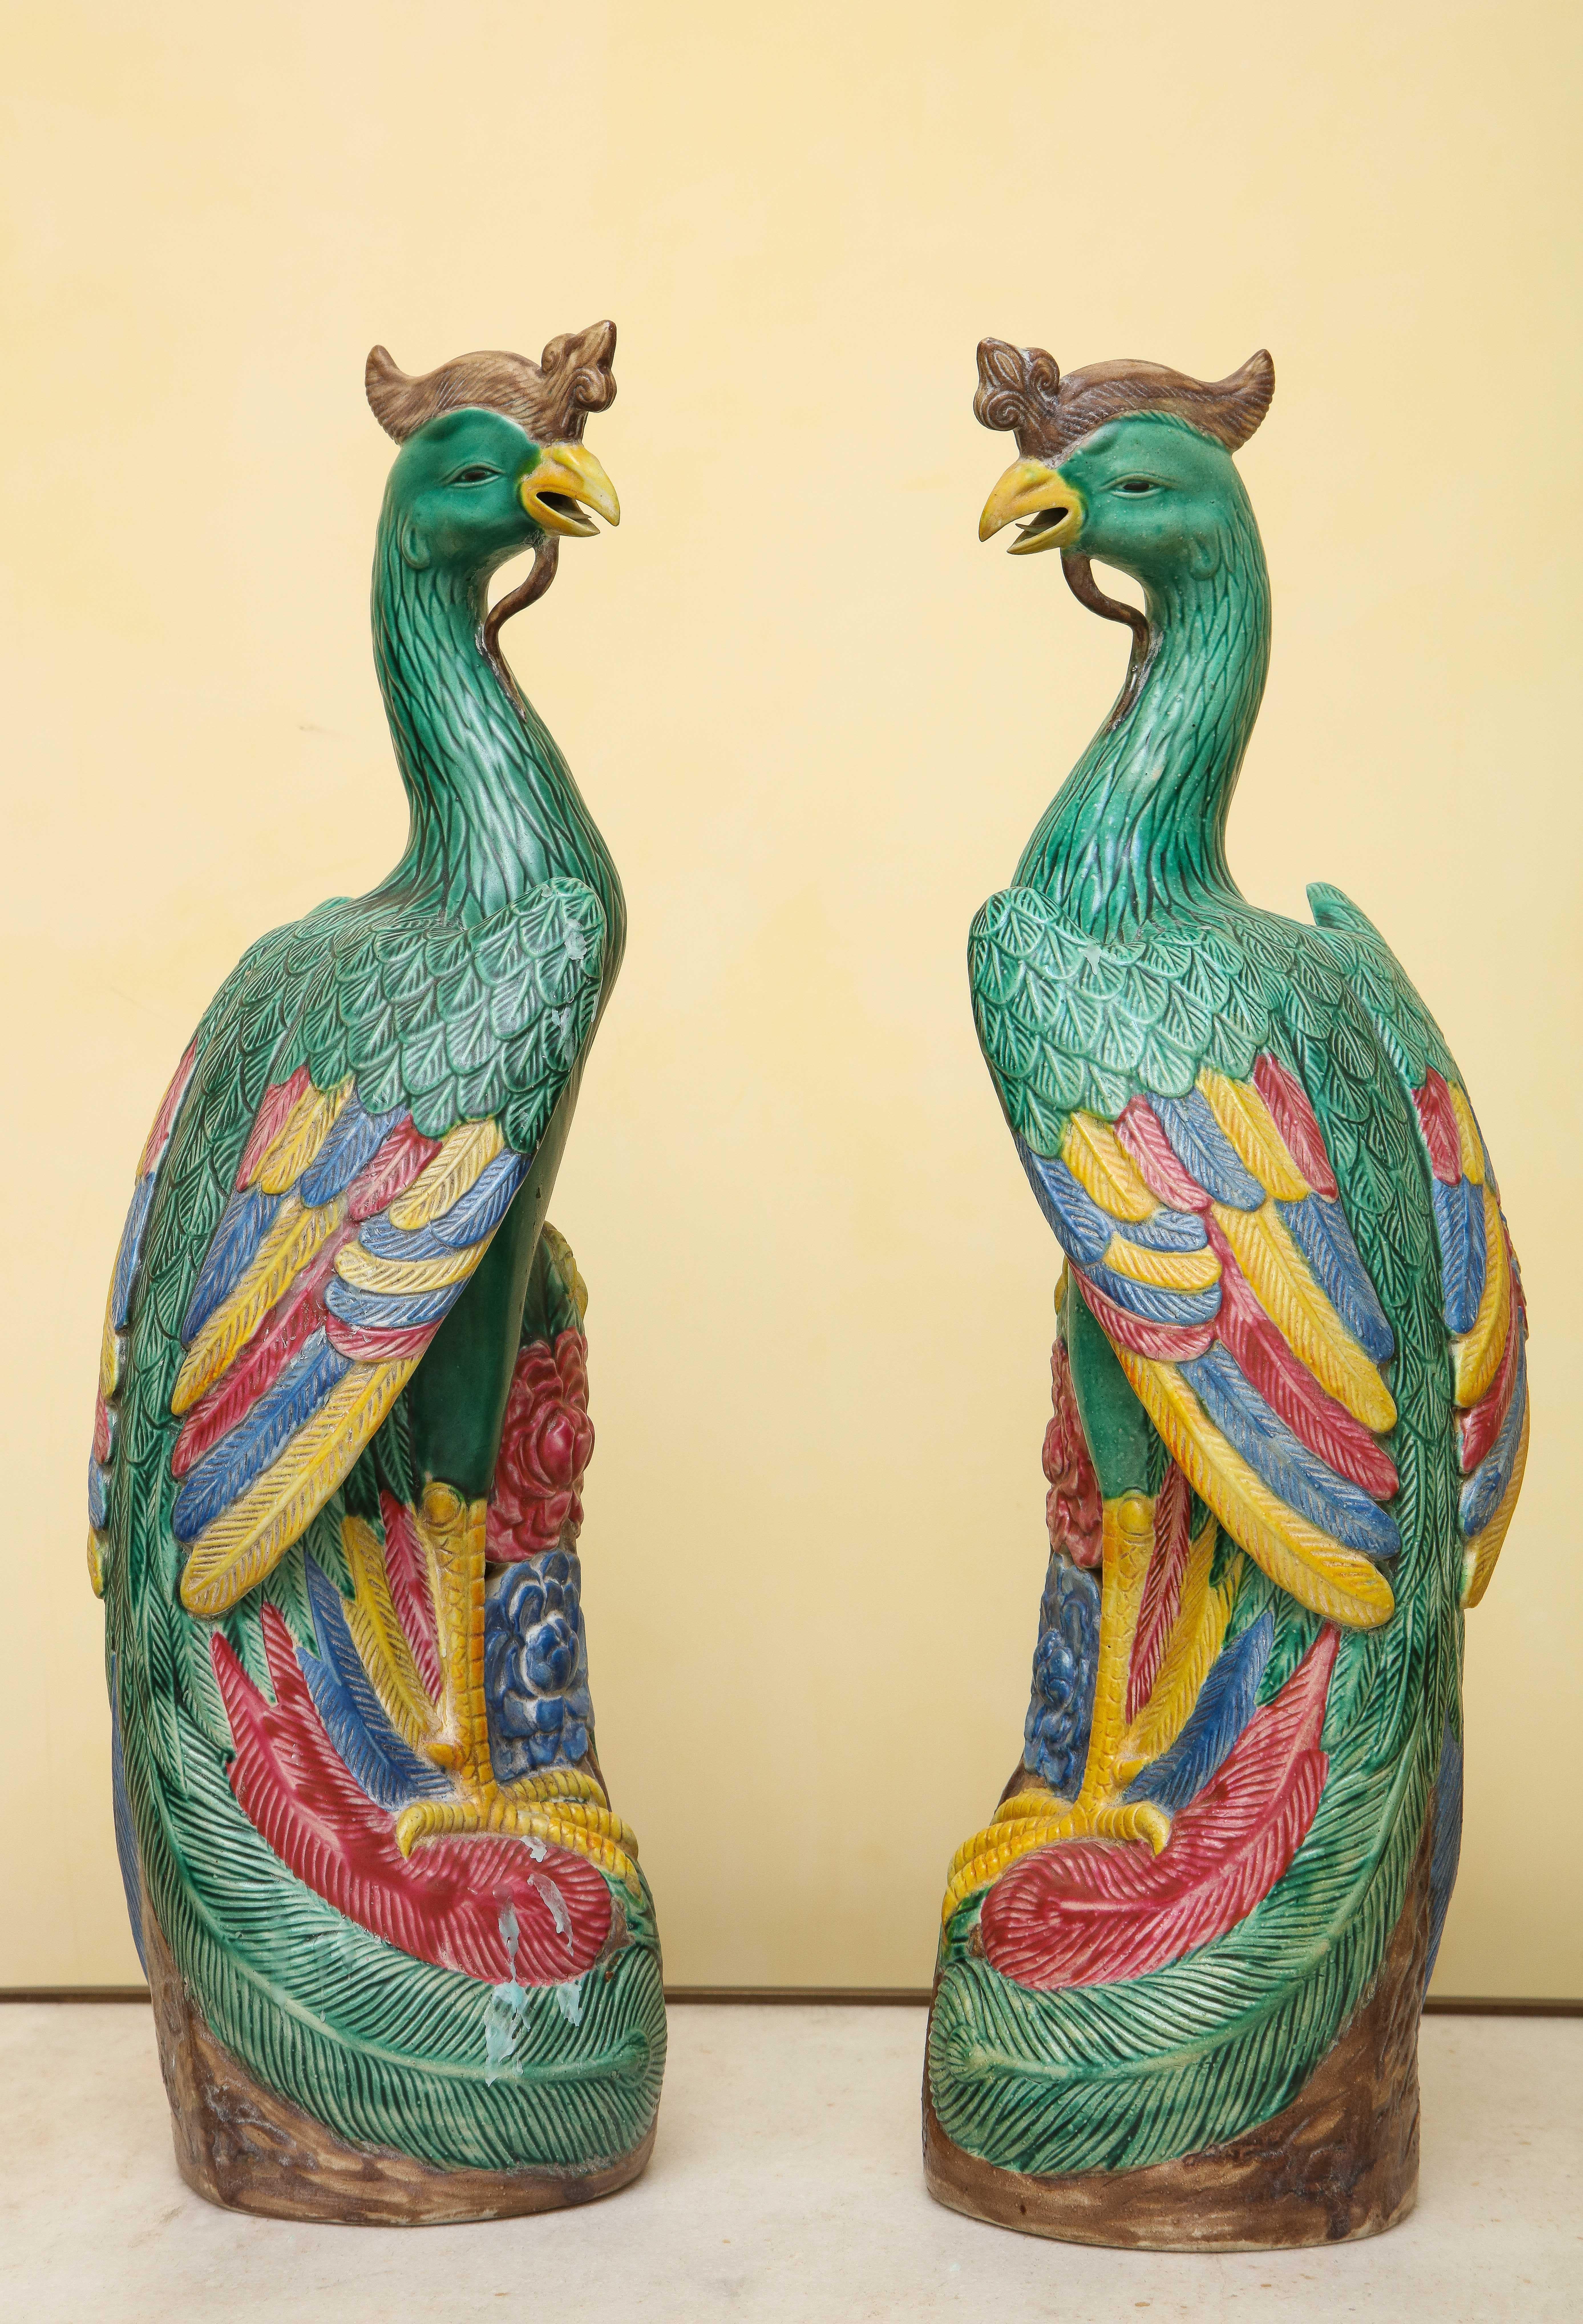 antique Chinese 1920-30s miniature chicken figurine export ceramic glazed